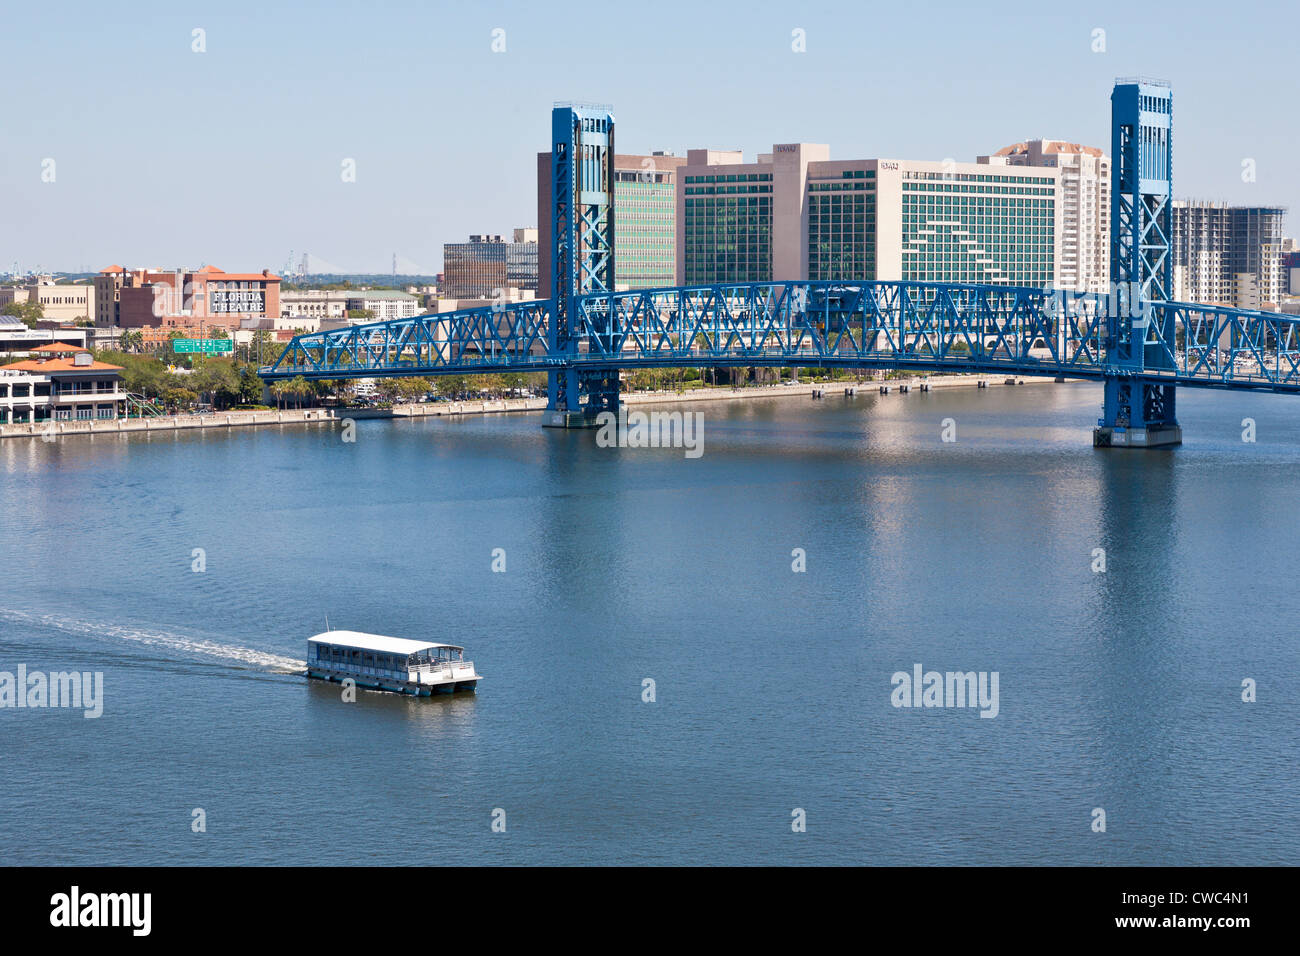 Water taxi on St. Johns River near Main Street Bridge in downtown Jacksonville, FL Stock Photo